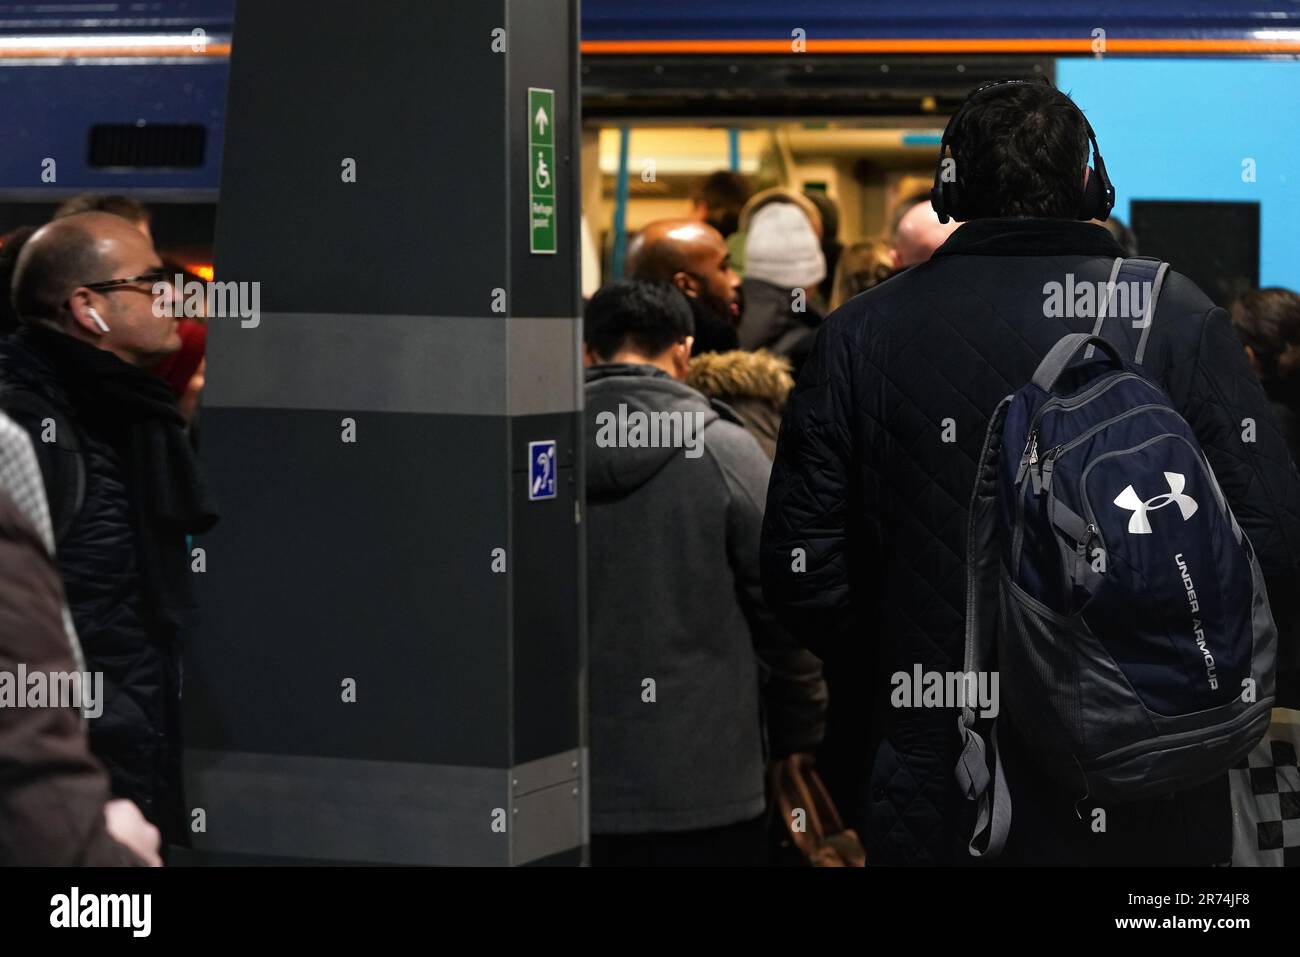 London, United Kingdom - February 01, 2019: Passengers getting on off underground tube train at London Bridge station platform during cold evening, cl Stock Photo